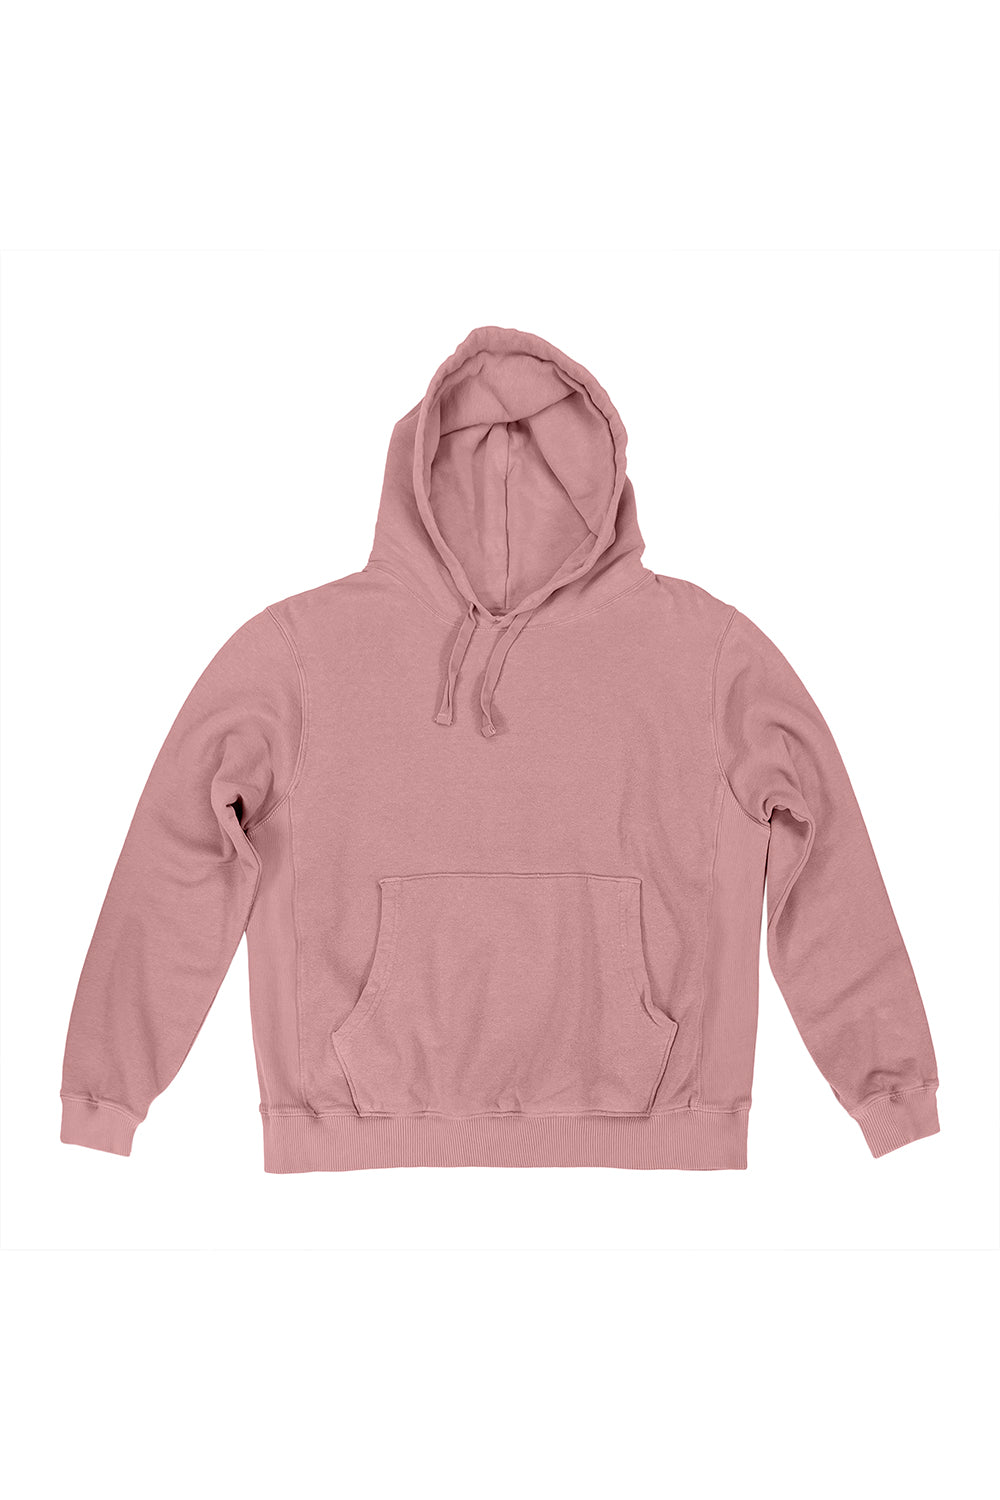 Montauk Hooded Sweatshirt | Jungmaven Hemp Clothing & Accessories / Color: Rose Quartz